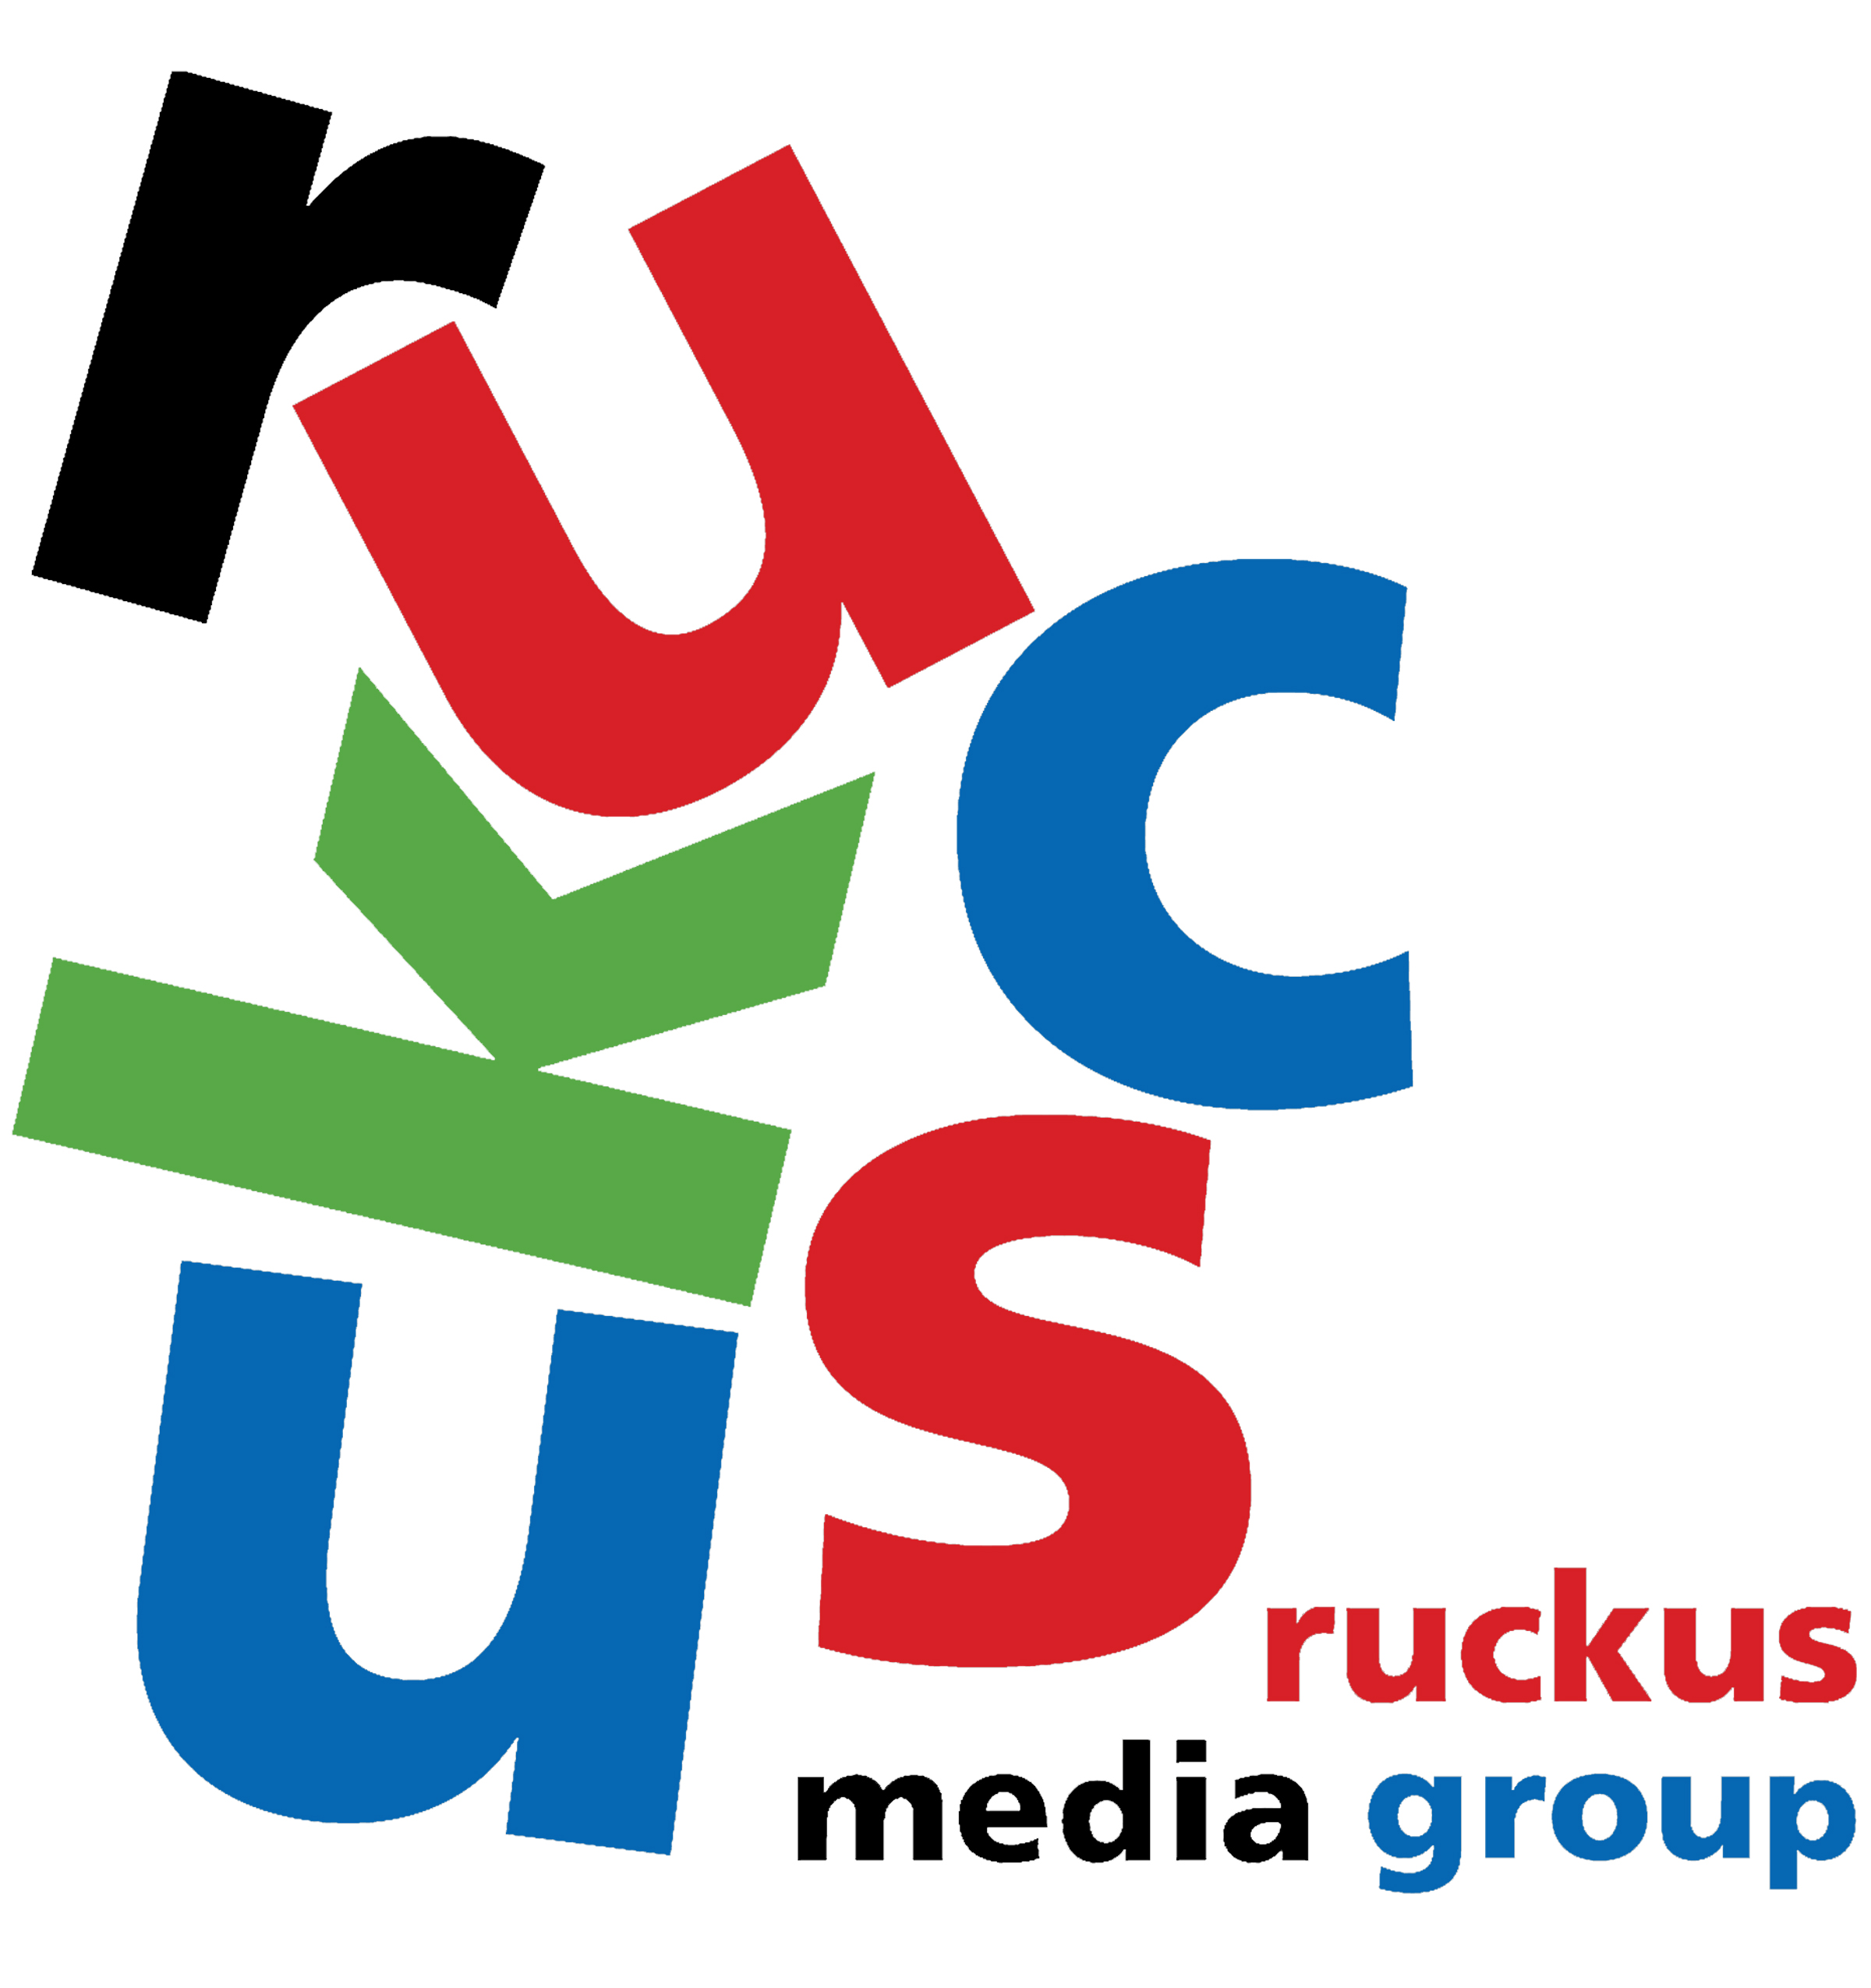 RUCKUS MEDIA GROUP